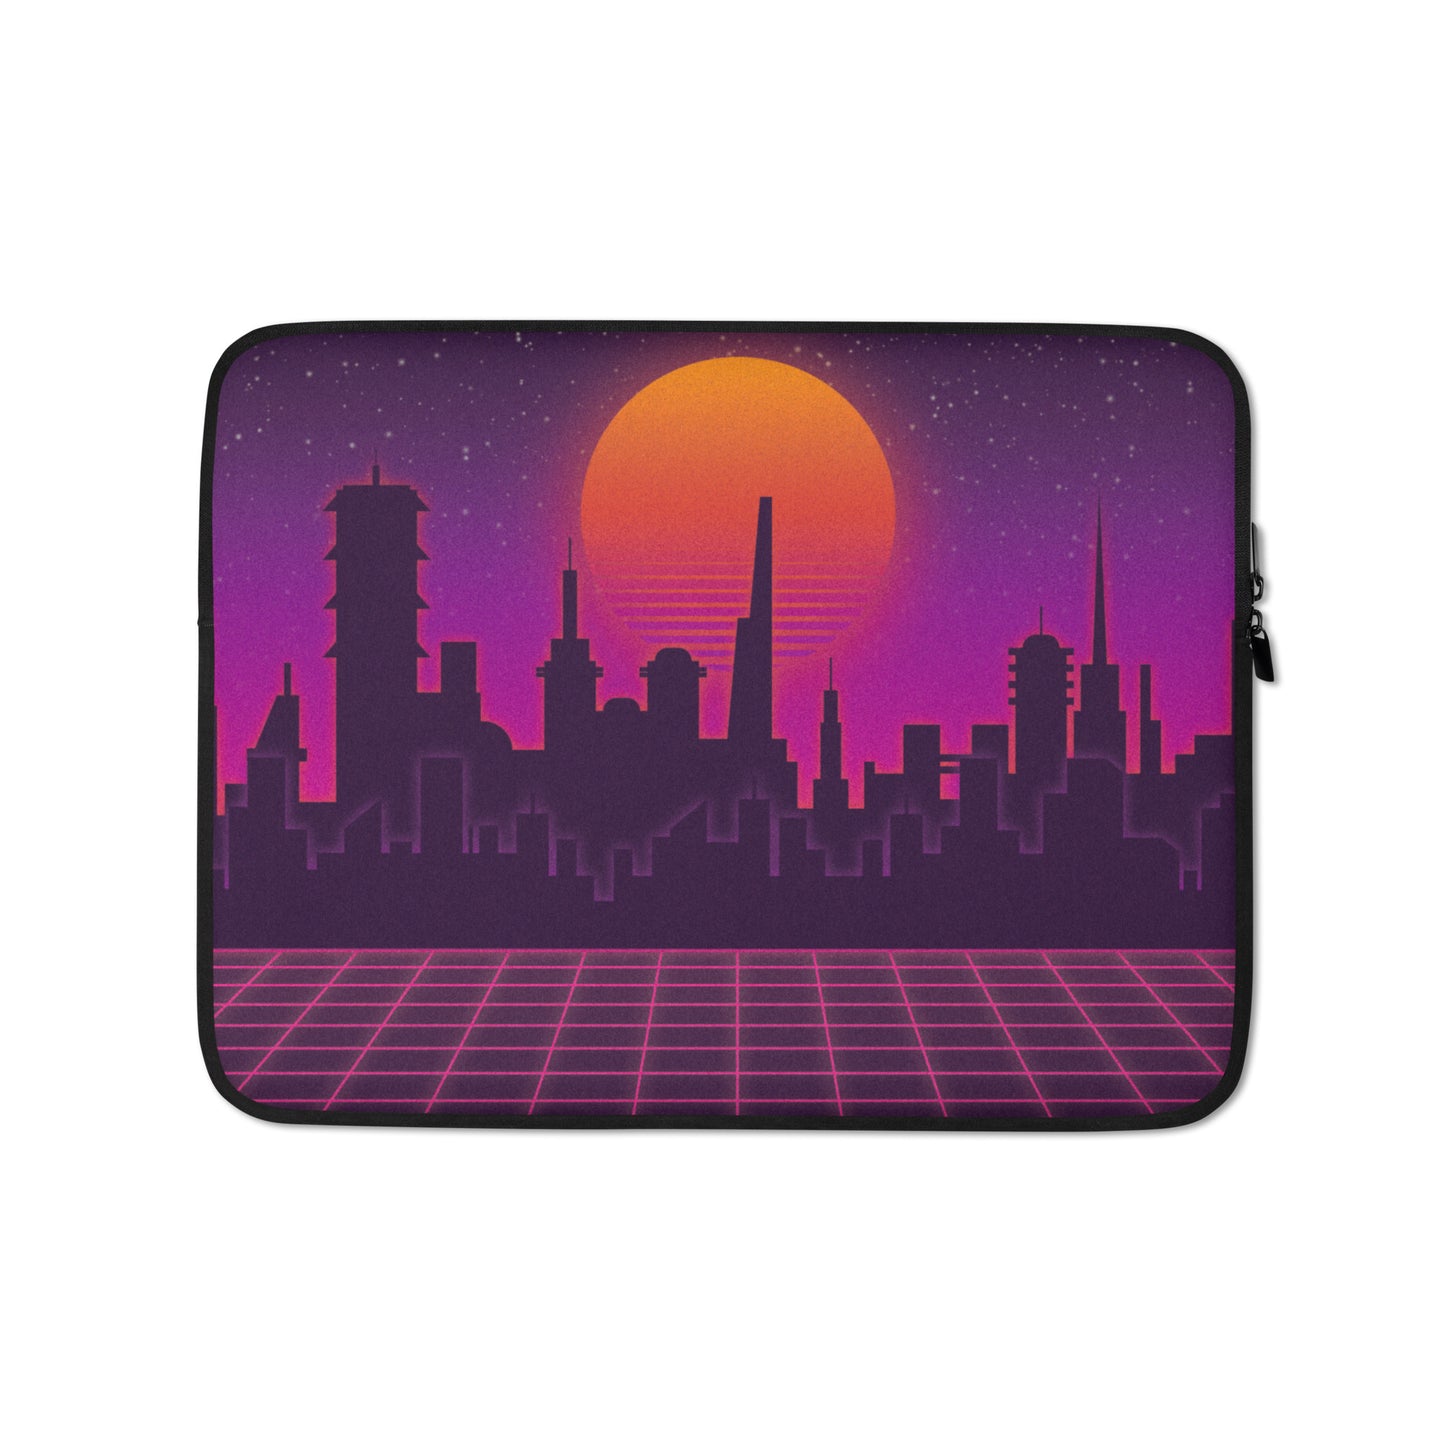 Cyberpunk city themed Laptop Sleeve